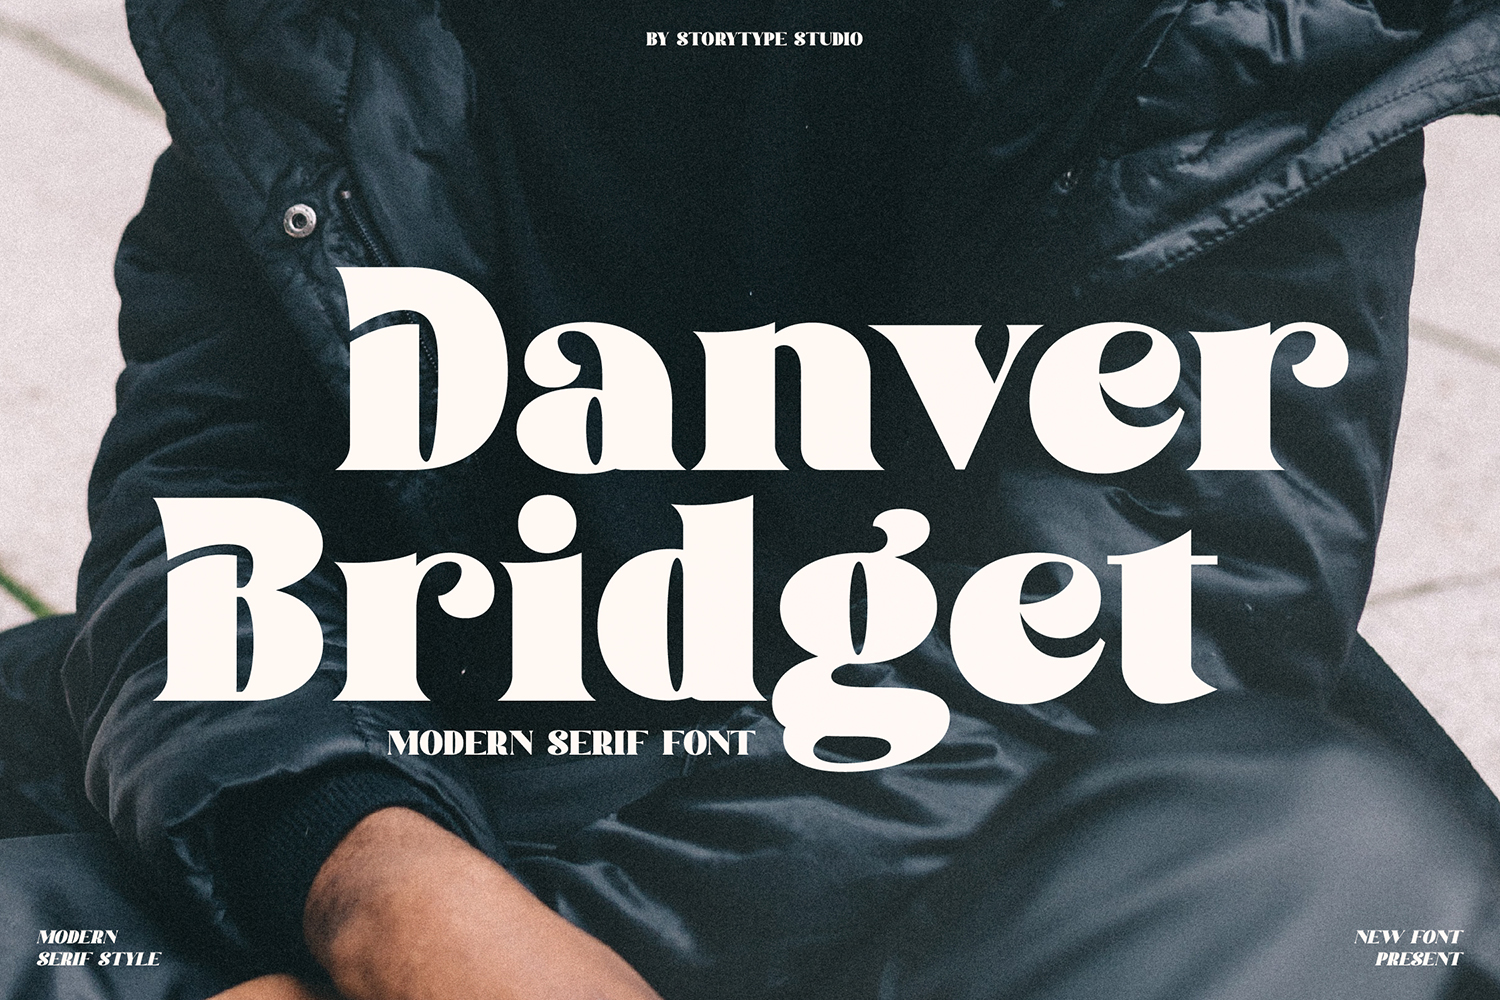 Danver Bridget Free Font